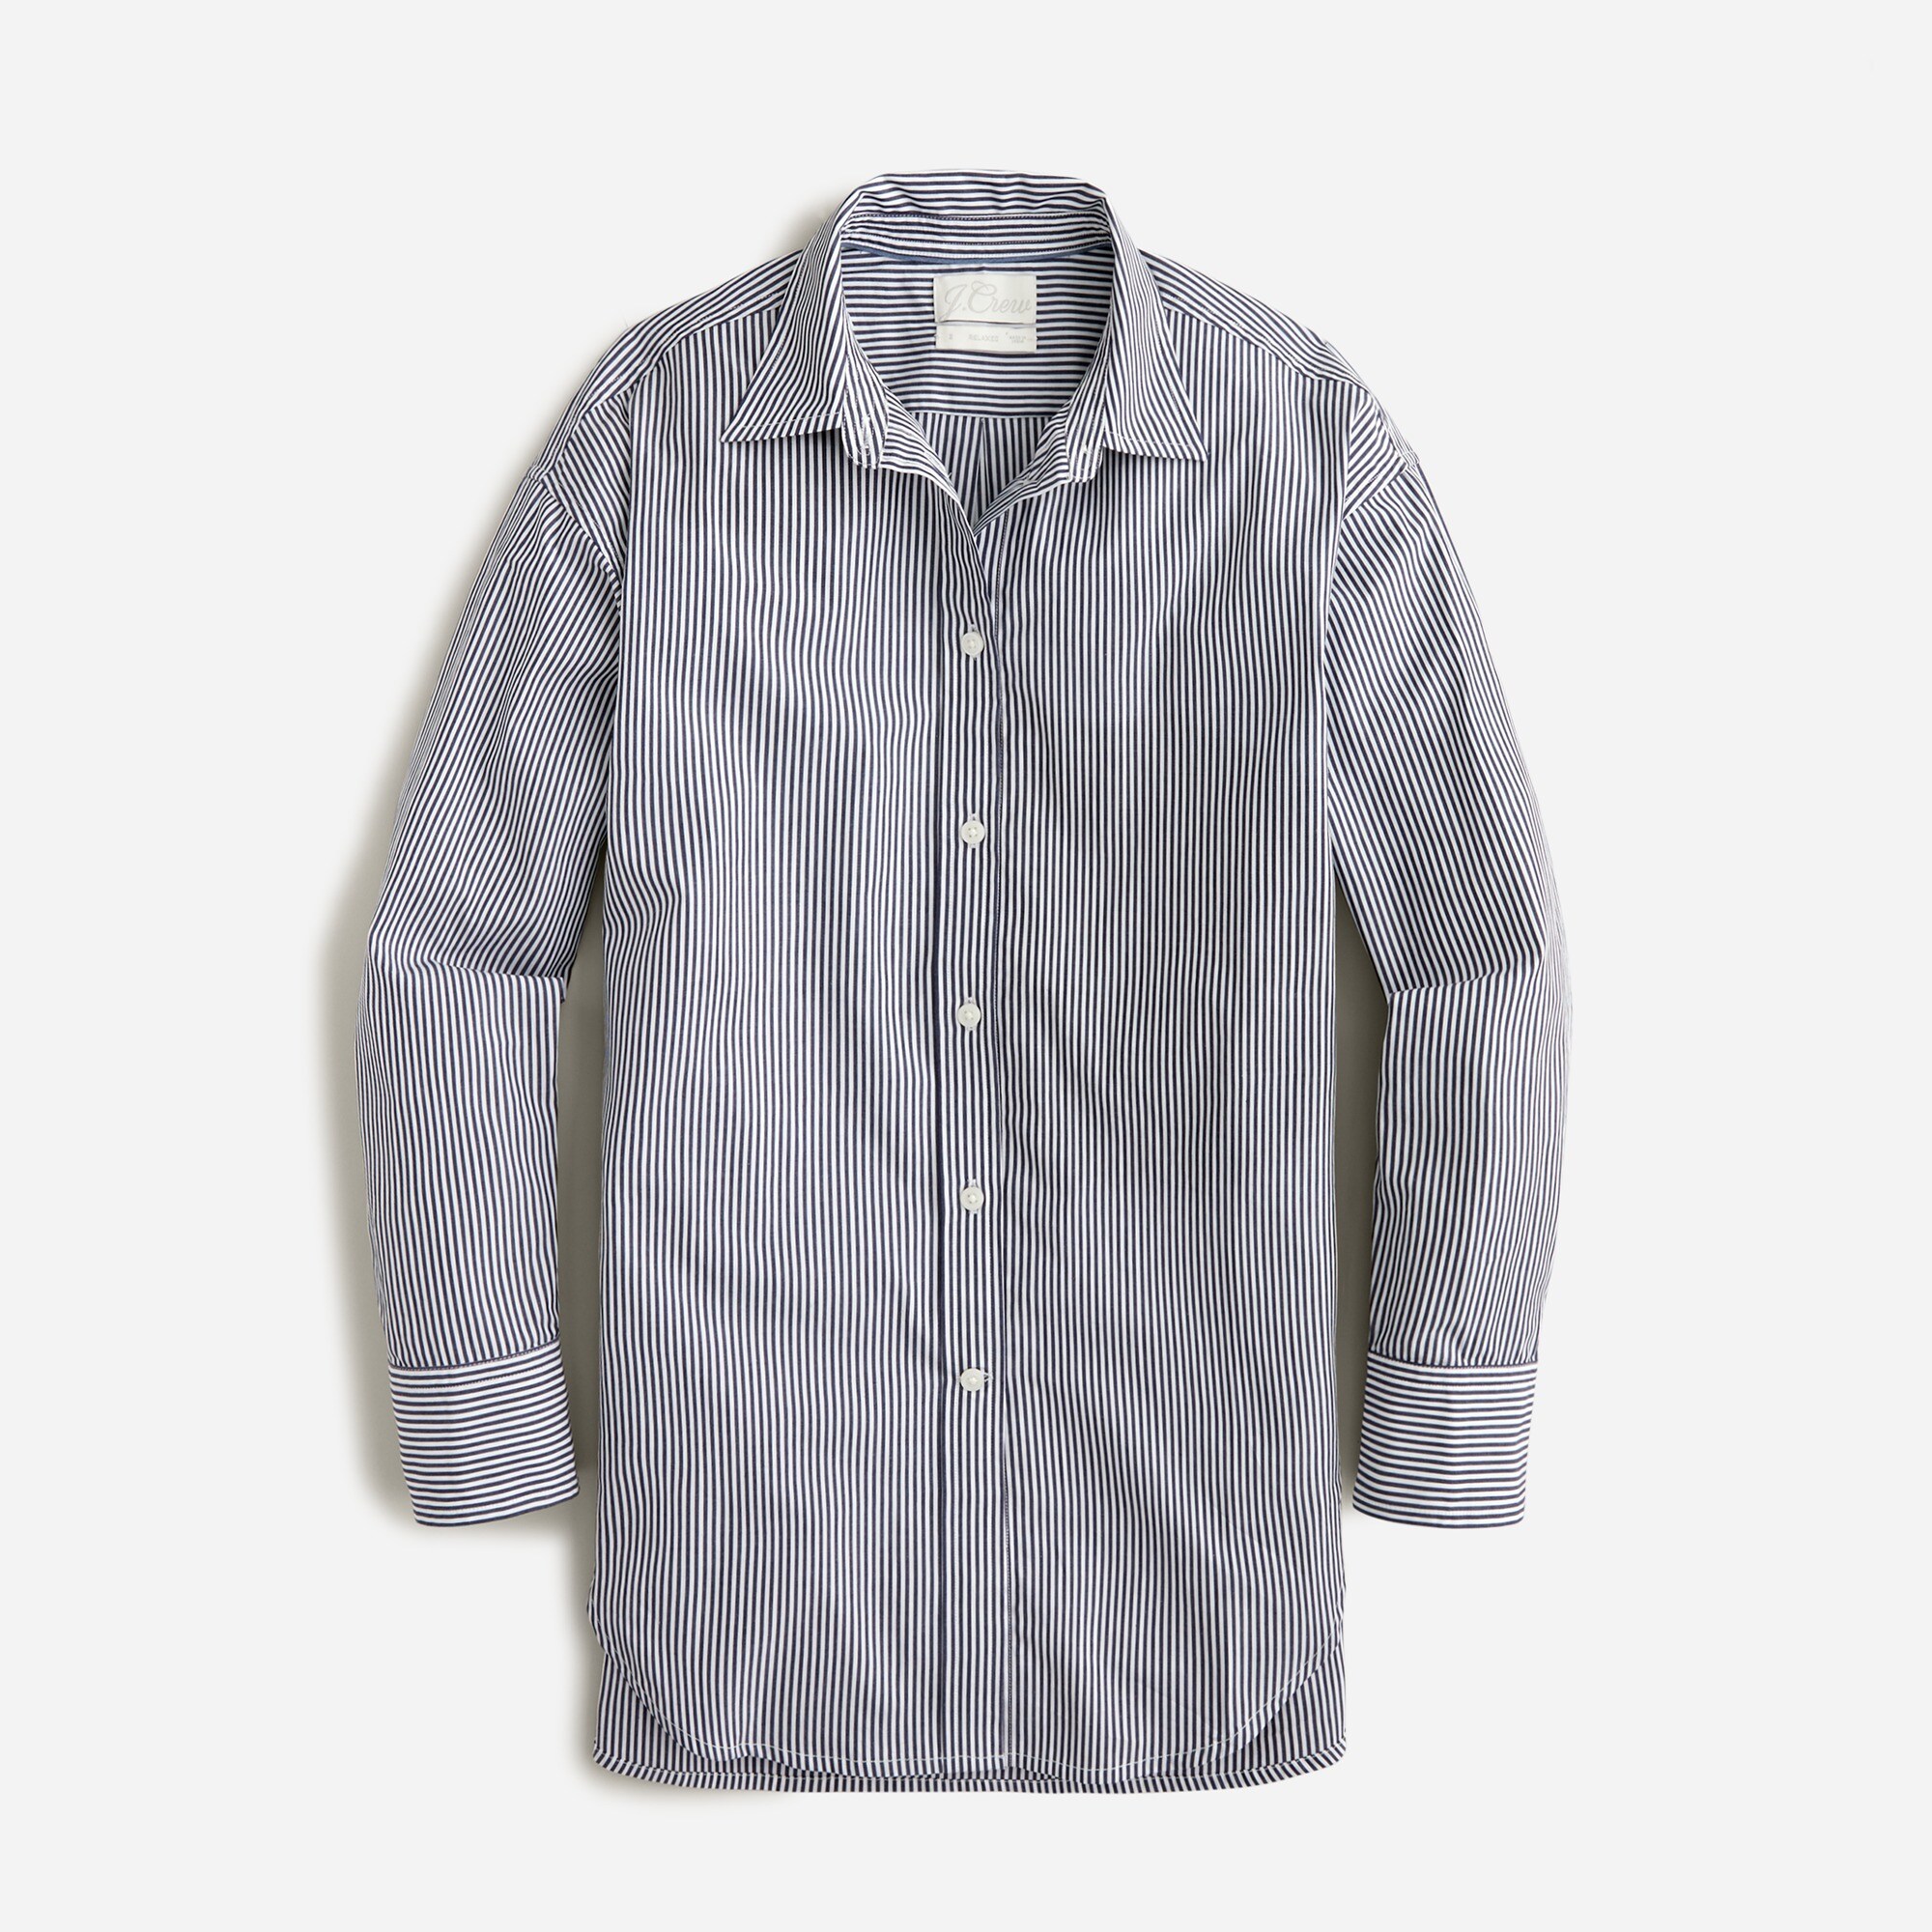  Petite relaxed-fit crisp cotton poplin shirt in navy stripe